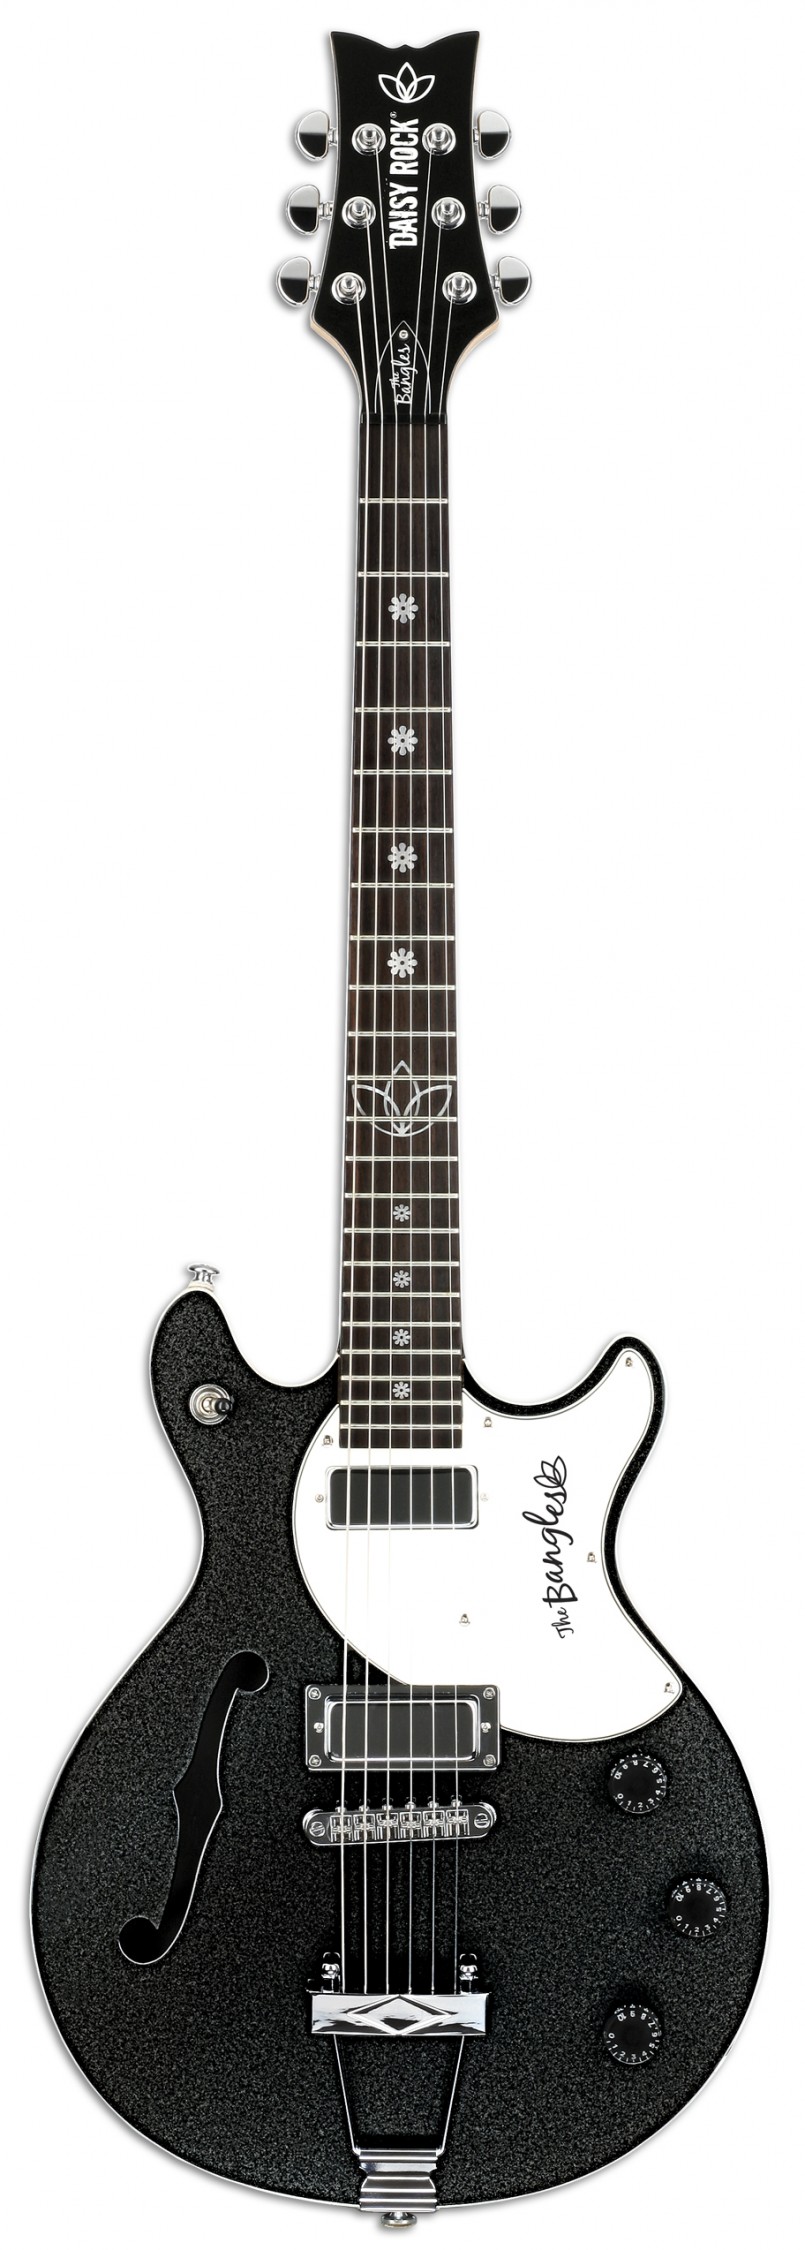 Bangles Signature Model | Daisy Rock Guitars the Girl Guitar Company